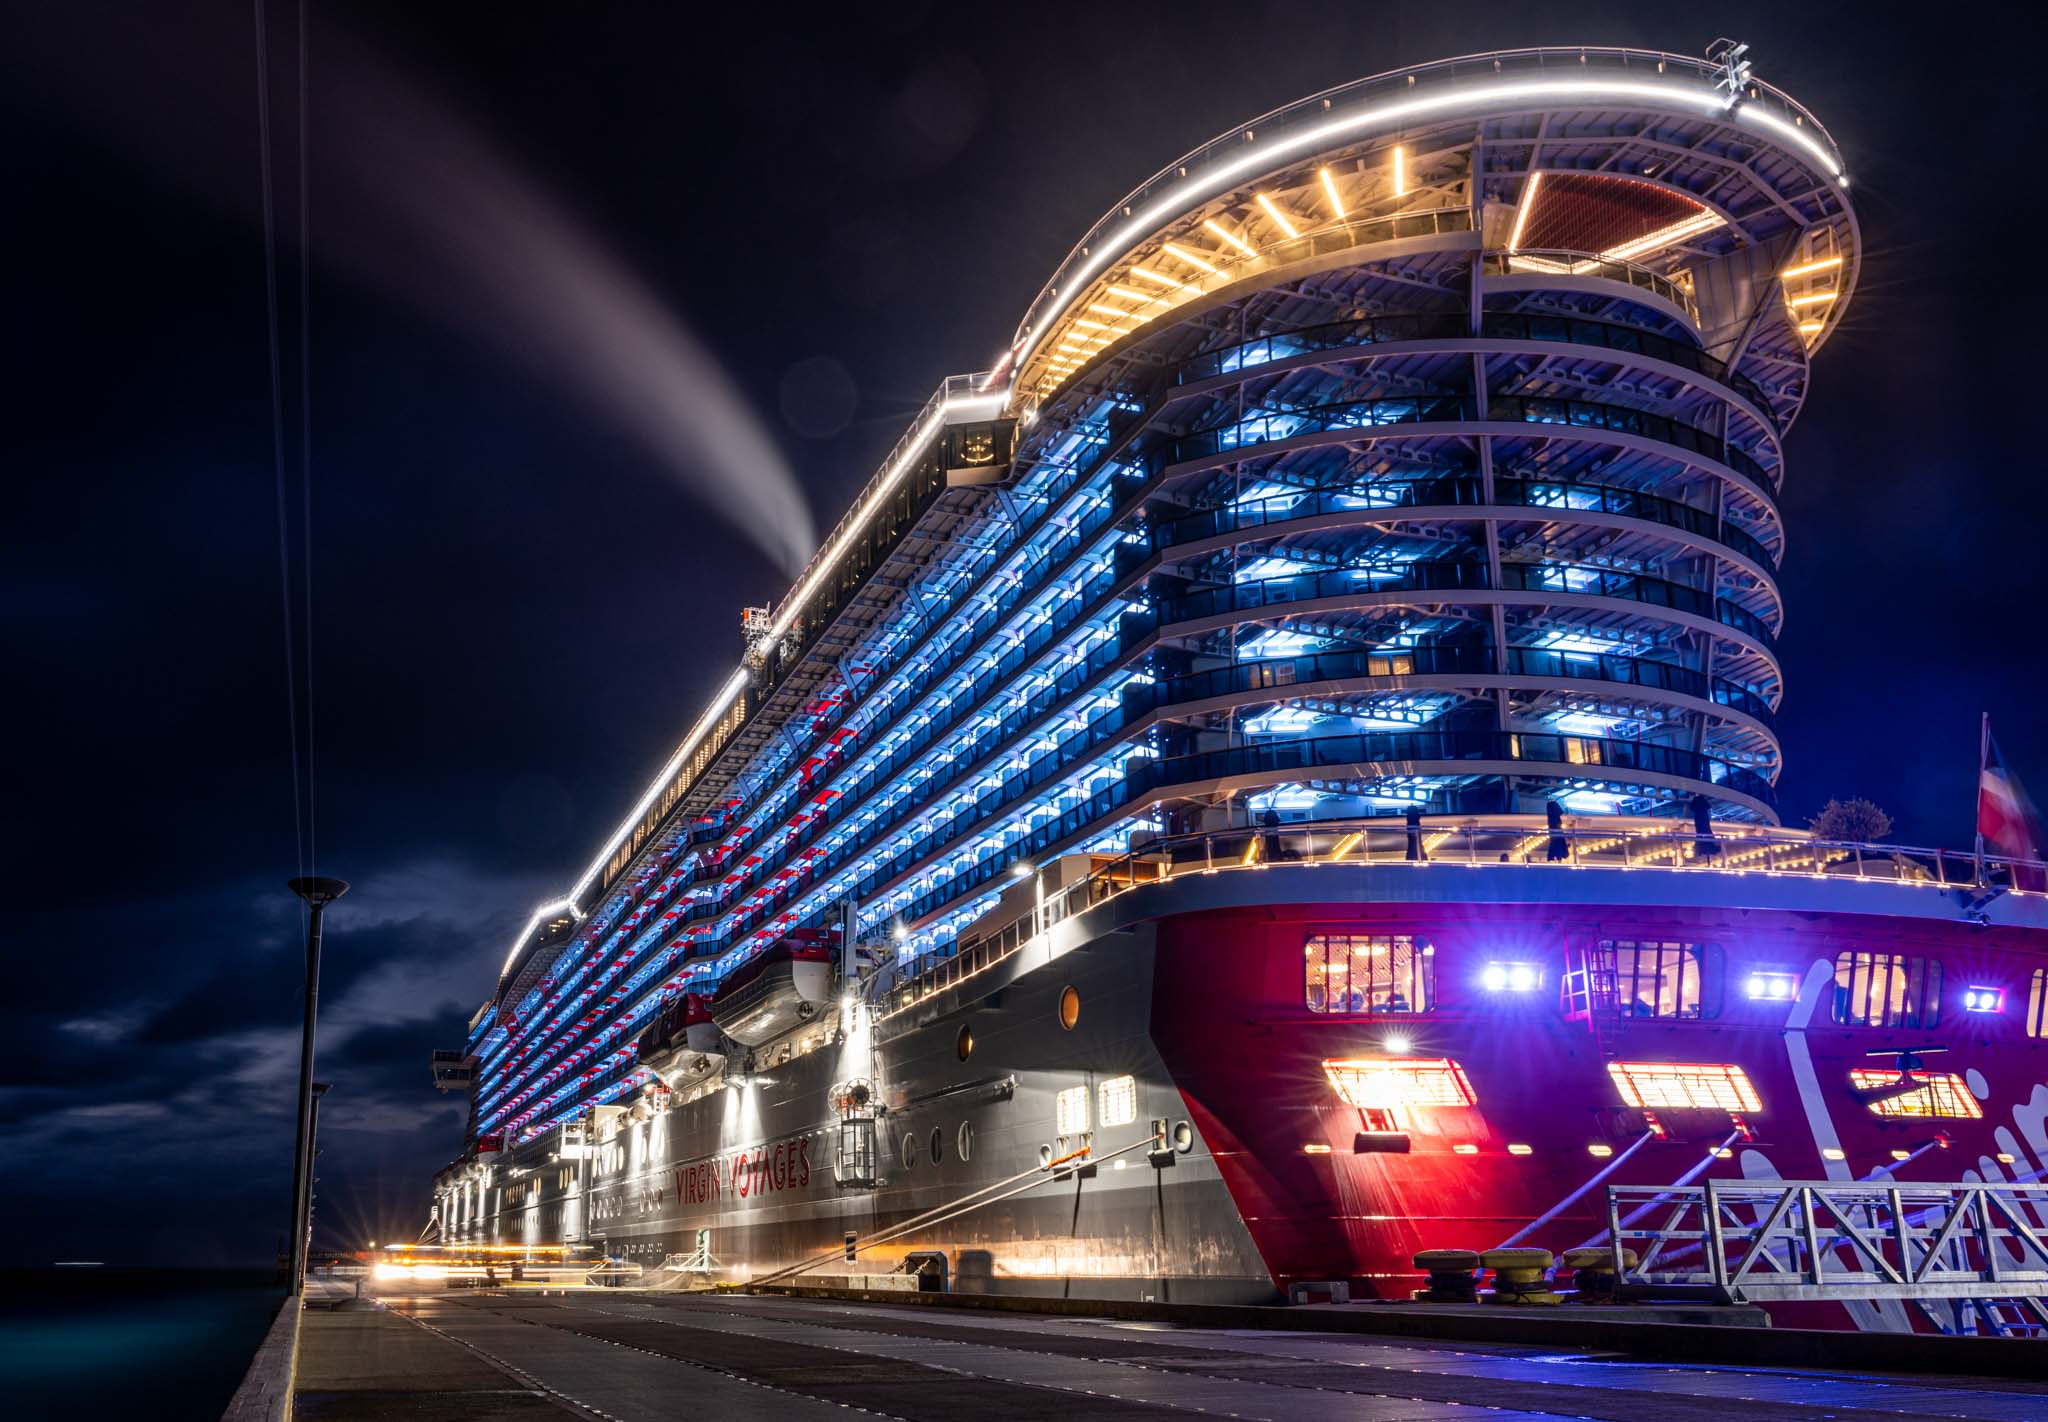 a large cruise ship at night